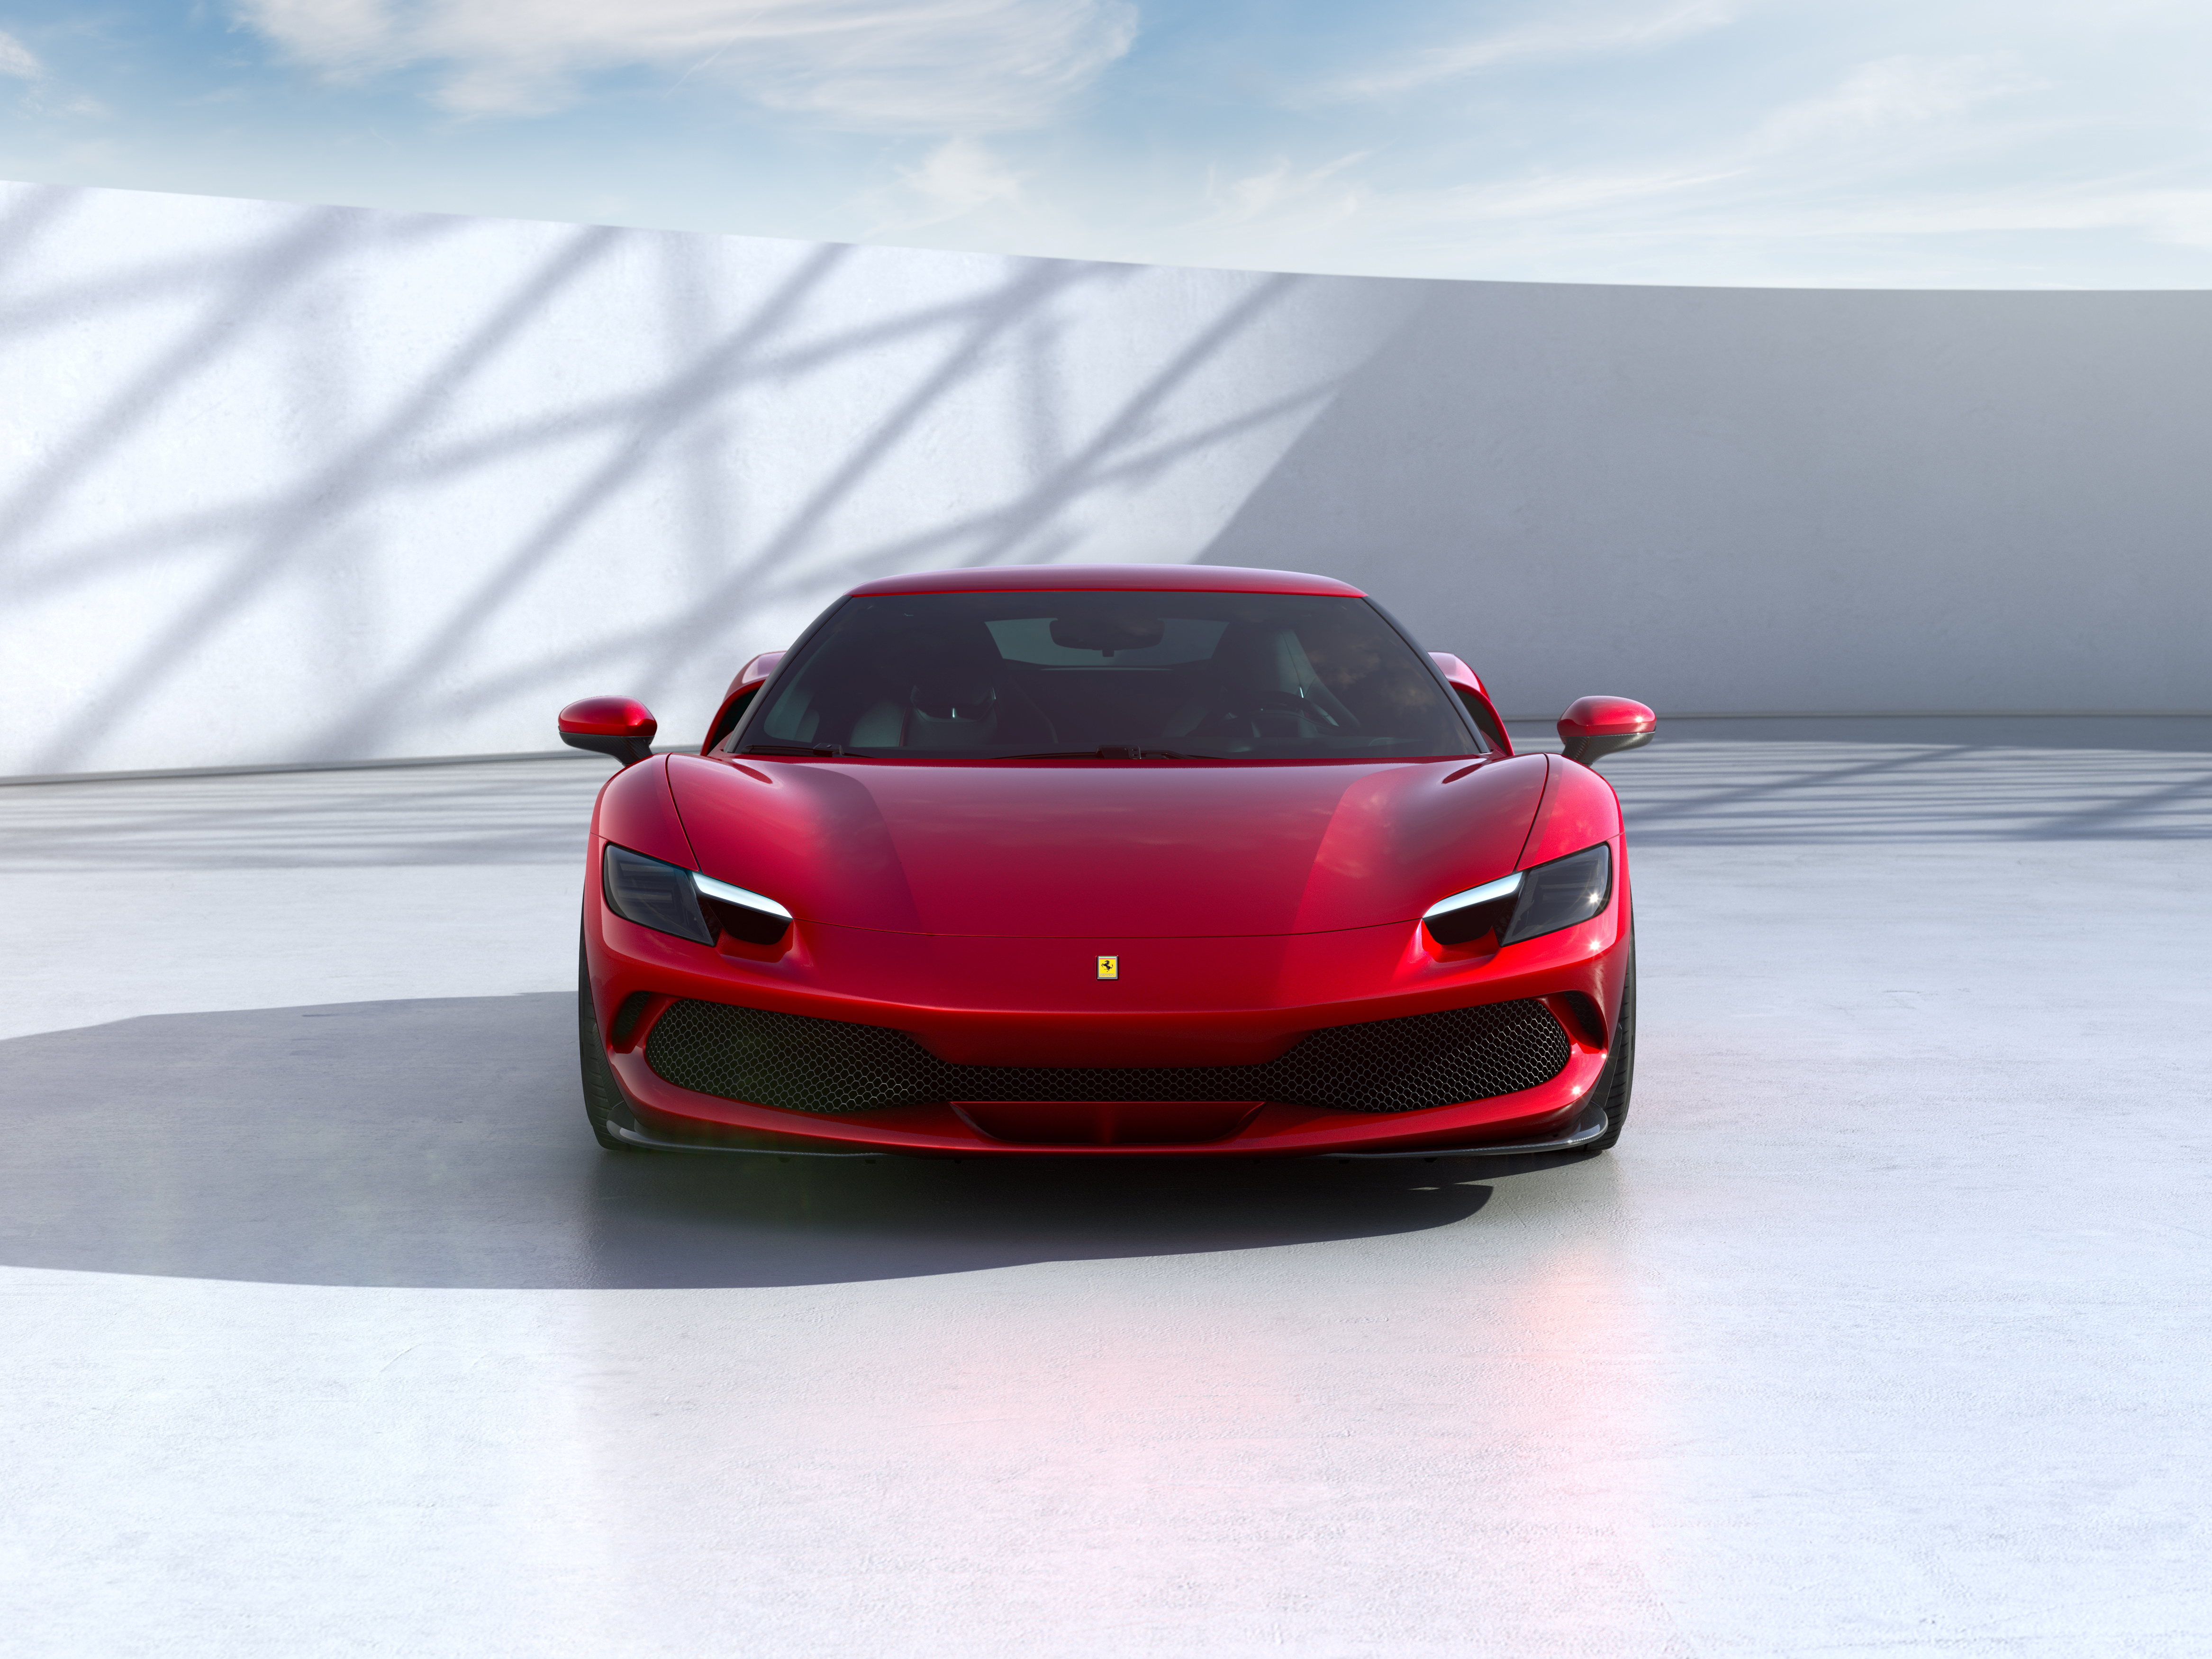 Ferrari unveils its new sports car